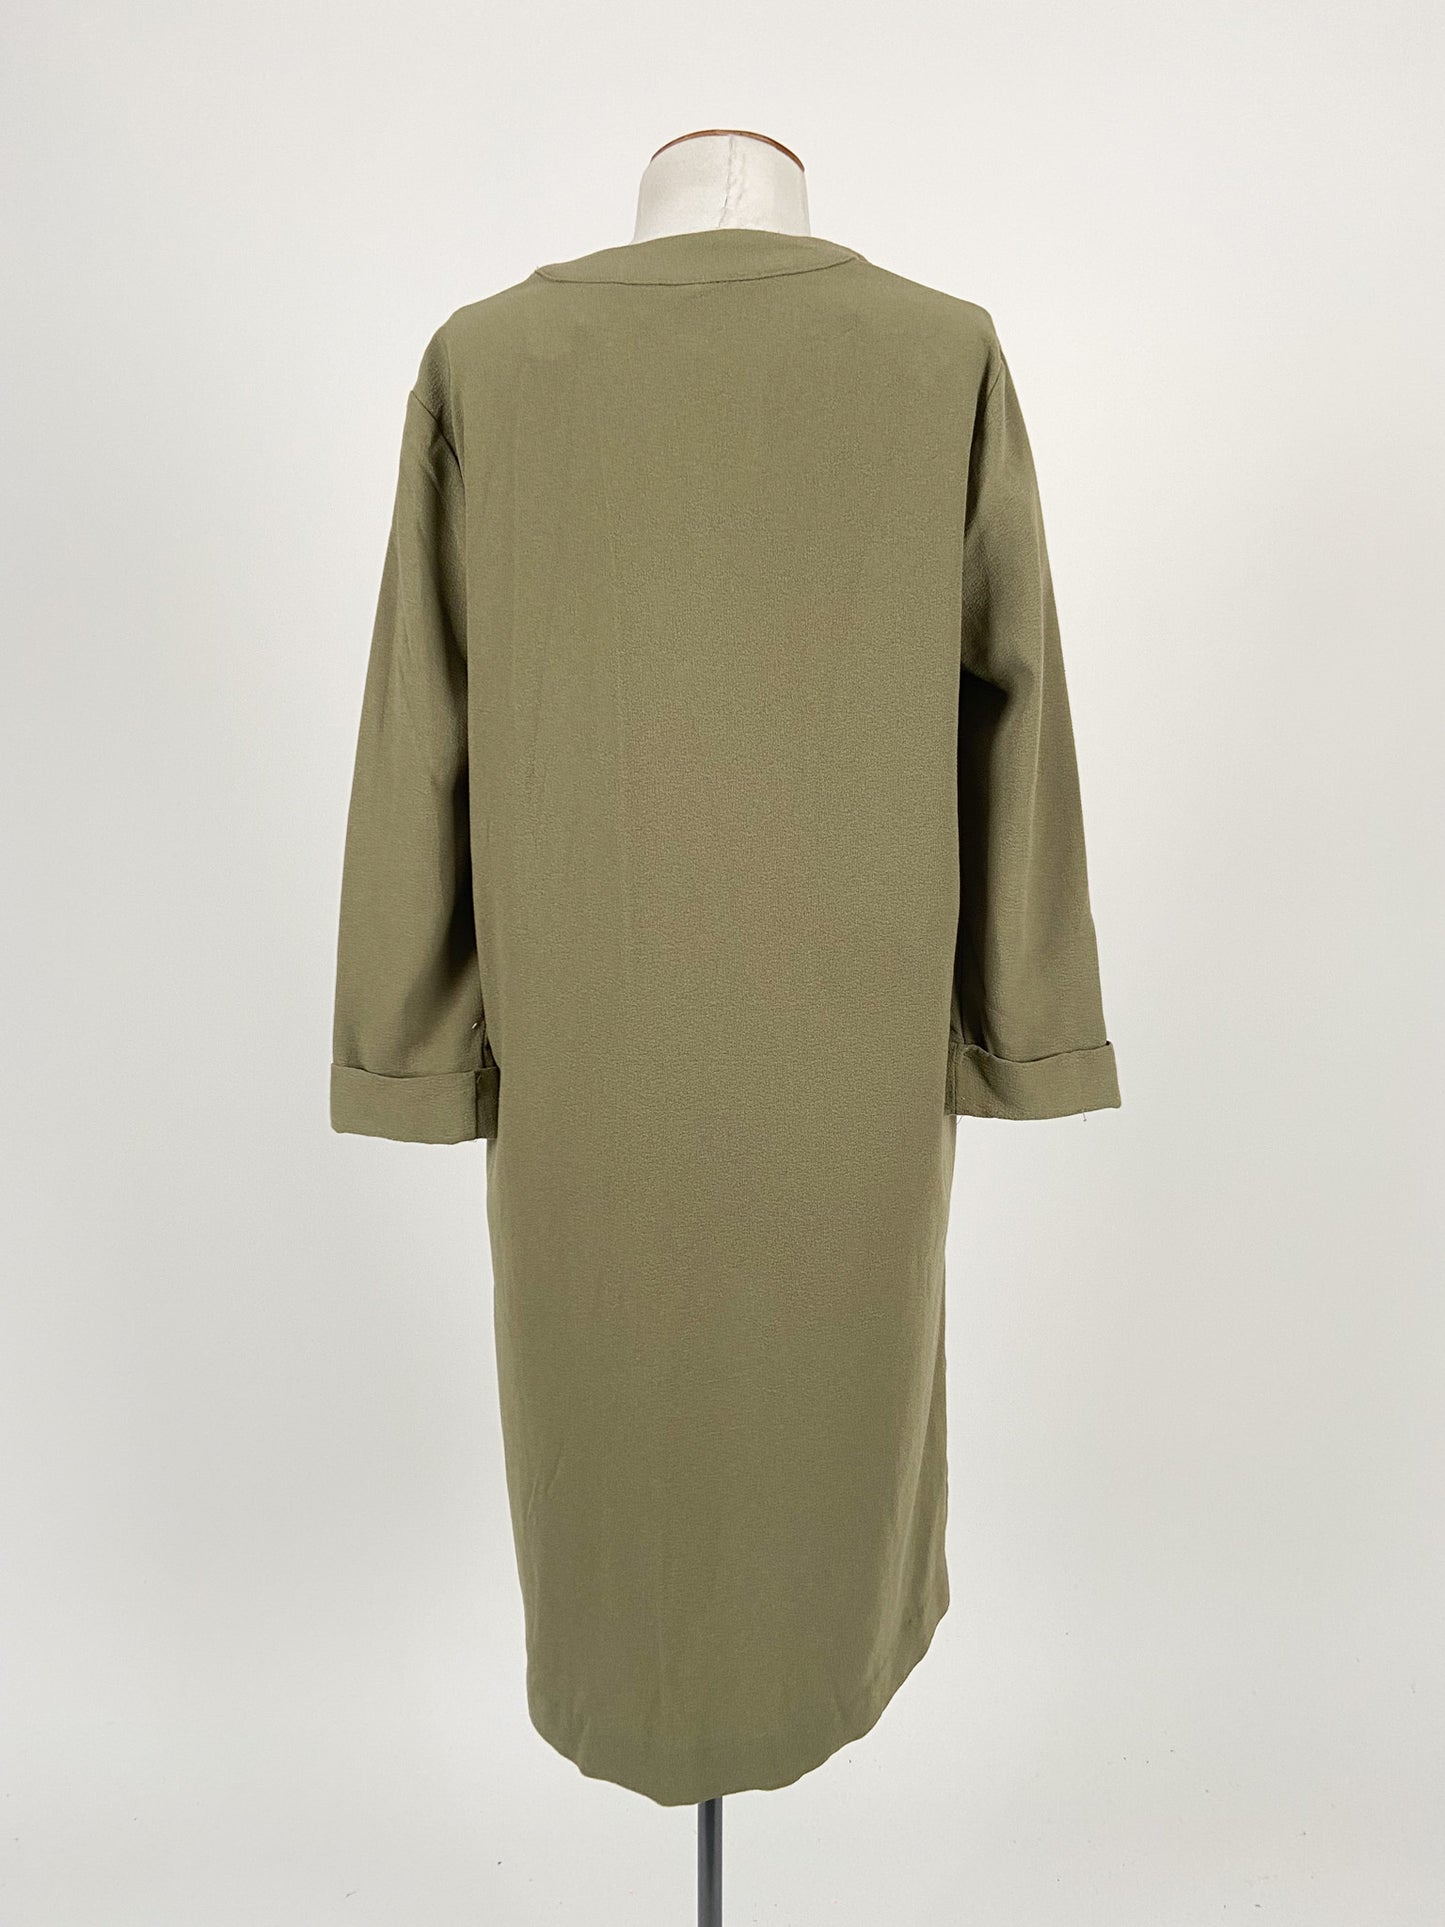 H&M | Green Casual/Workwear Cardigan | Size S